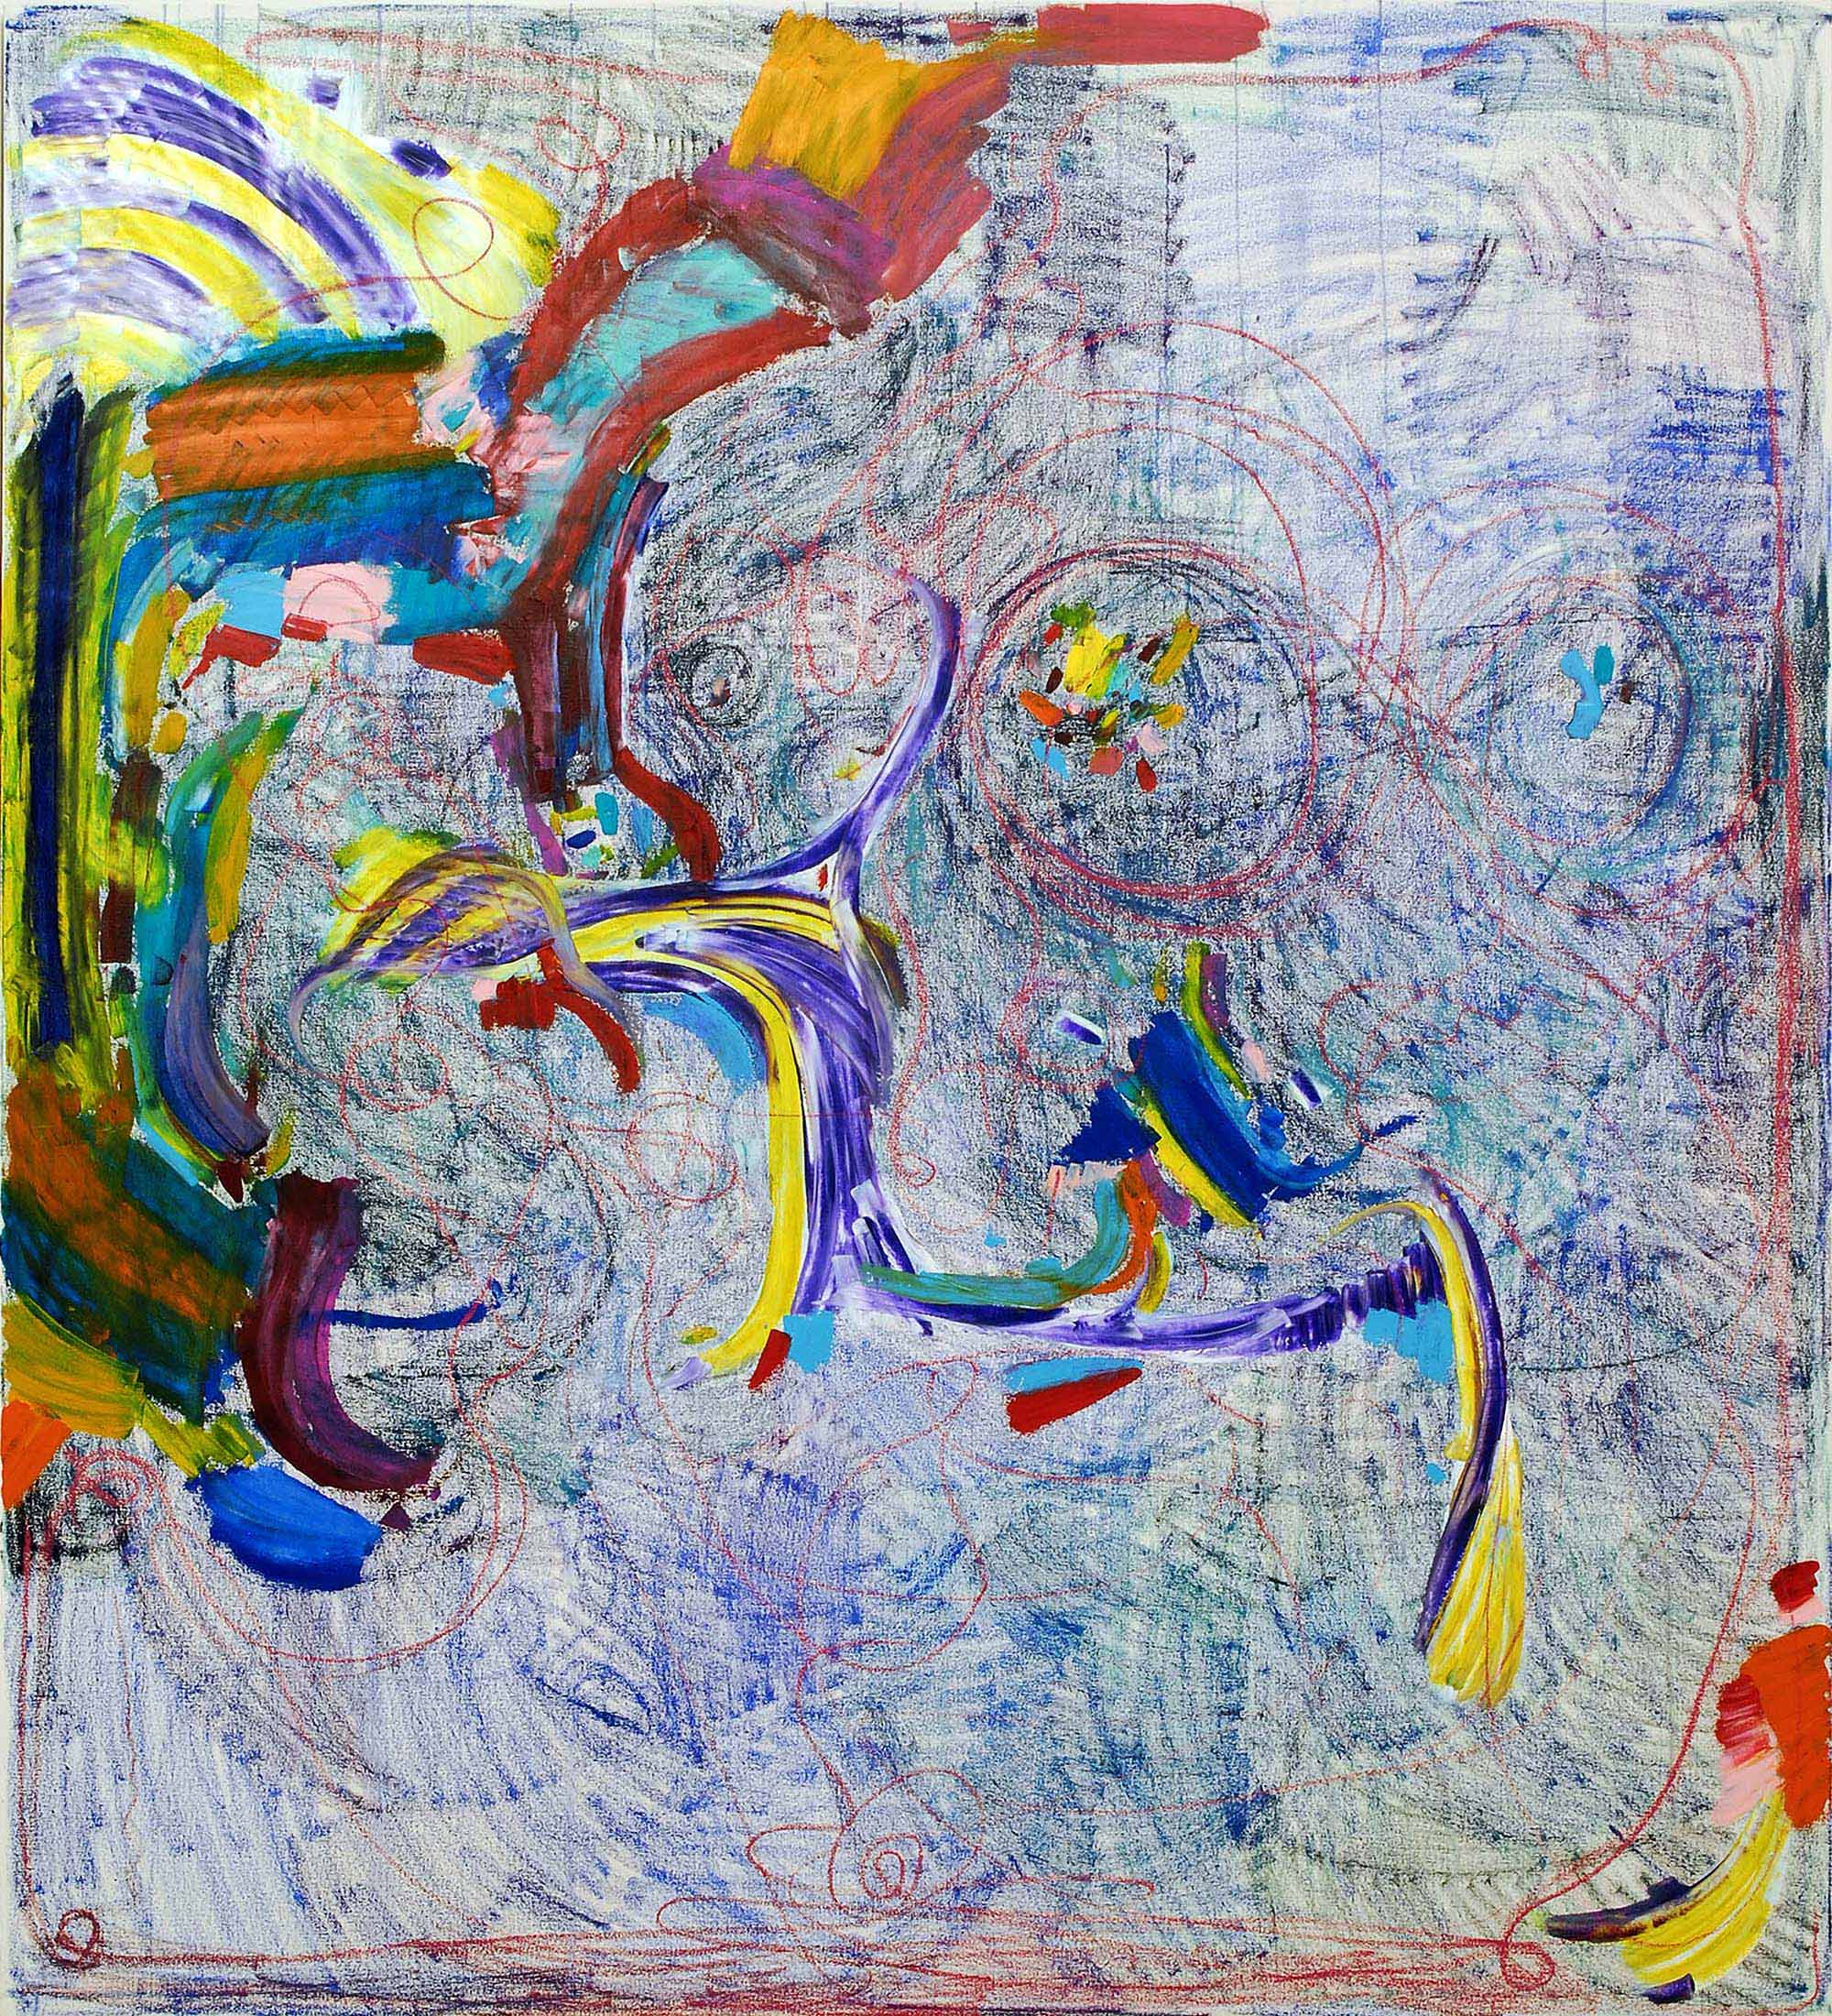 11 - Joanne Greenbaum at Rachel Uffner Gallery New York - 15.04.2014